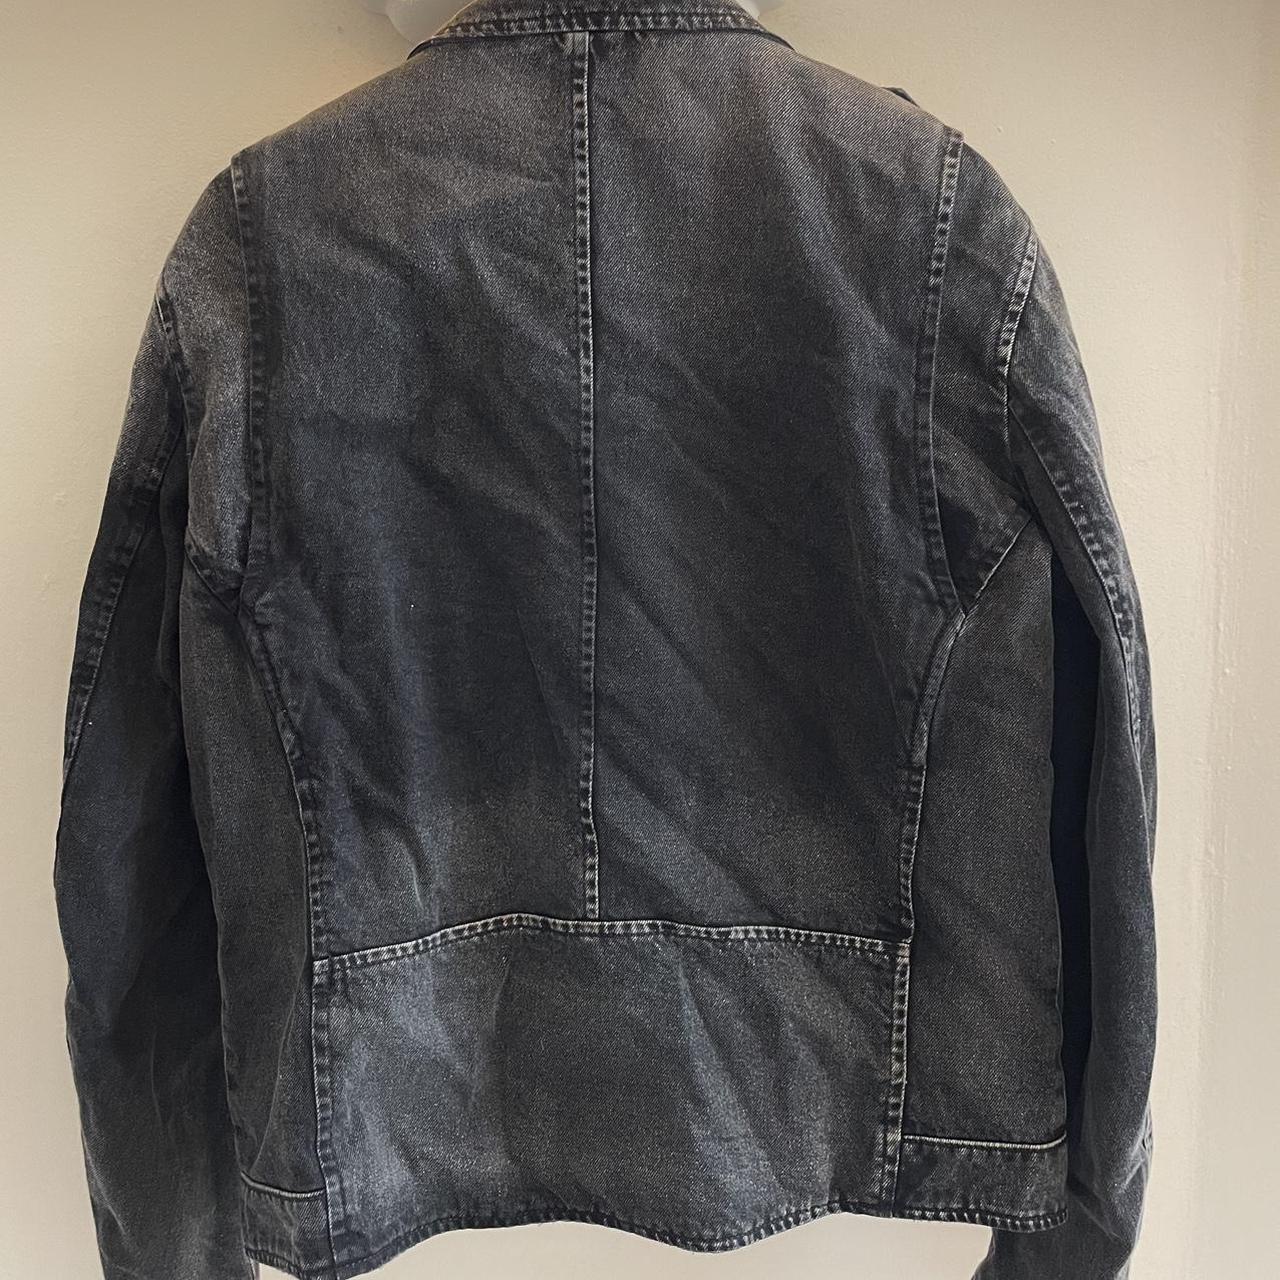 H&M Biker Jacket *Been worn a few times, mostly... - Depop